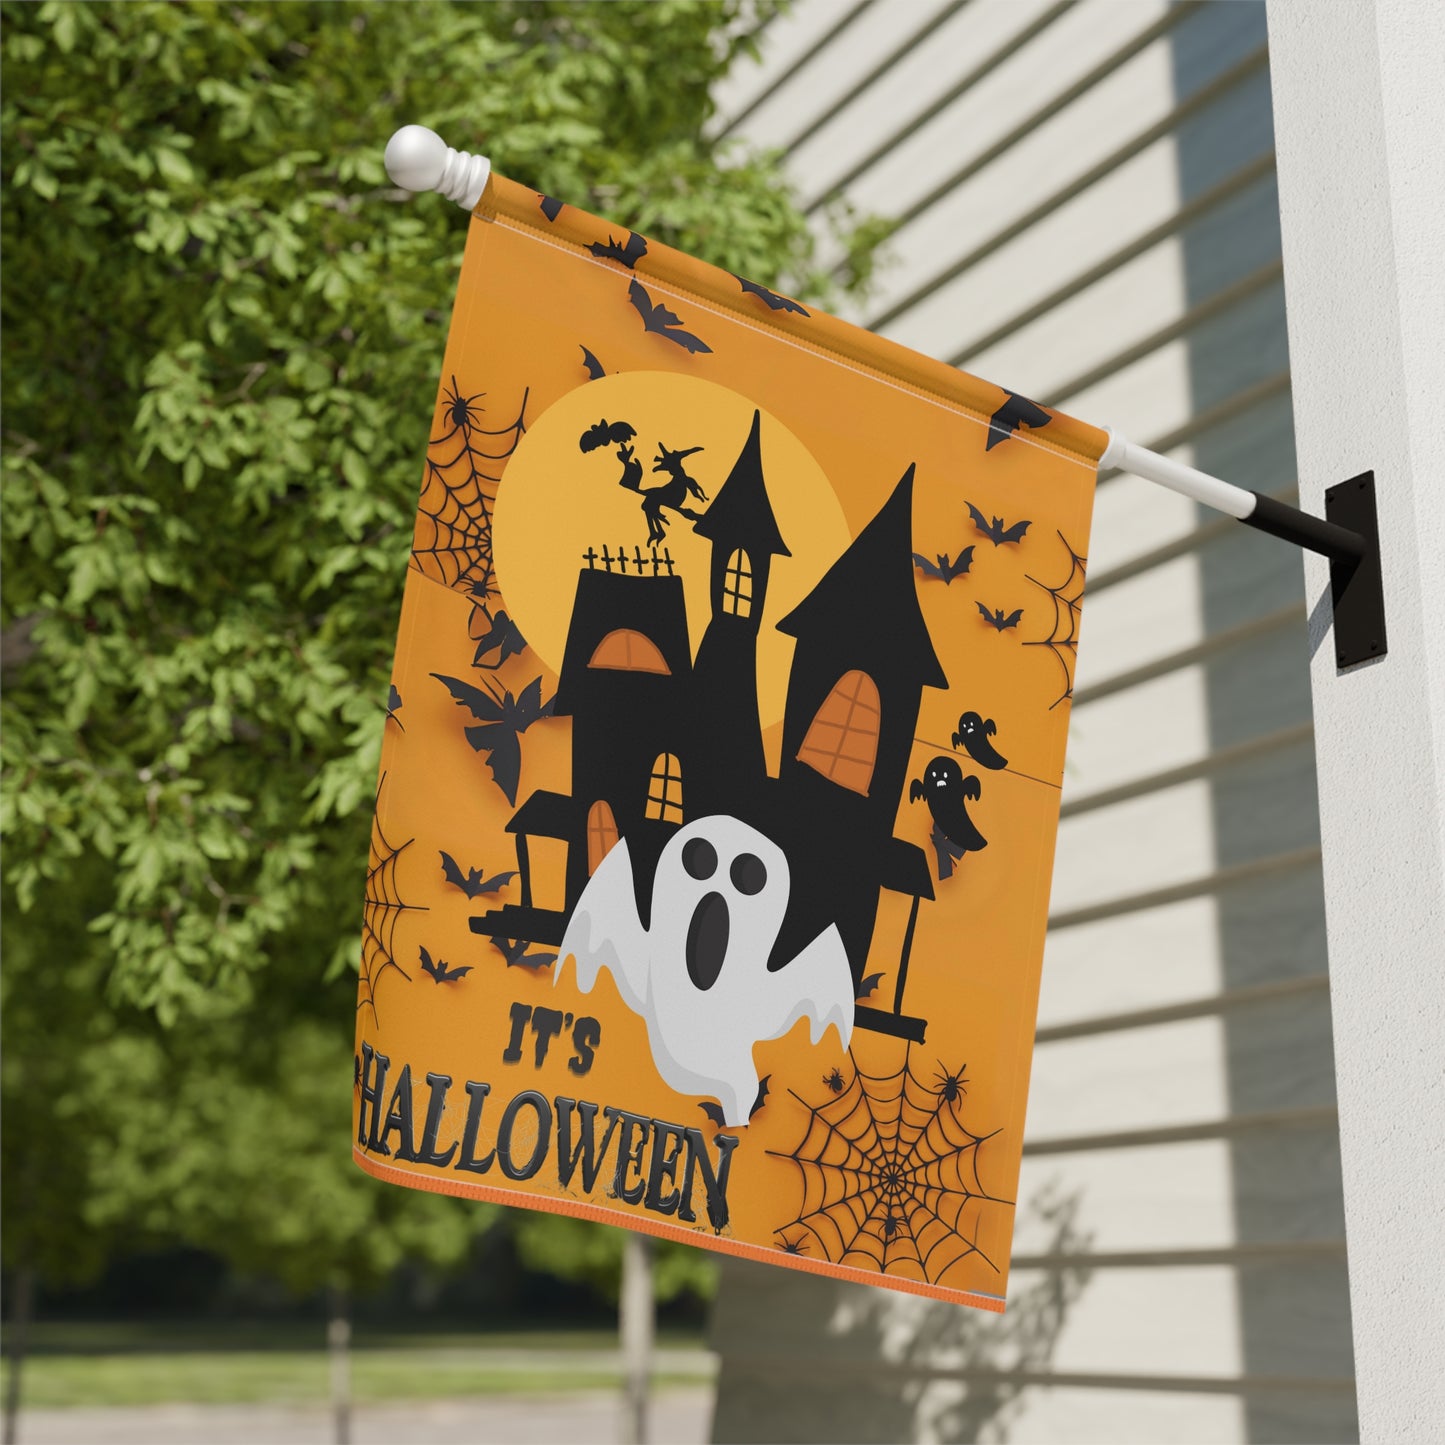 It's Halloween Garden & House Banners